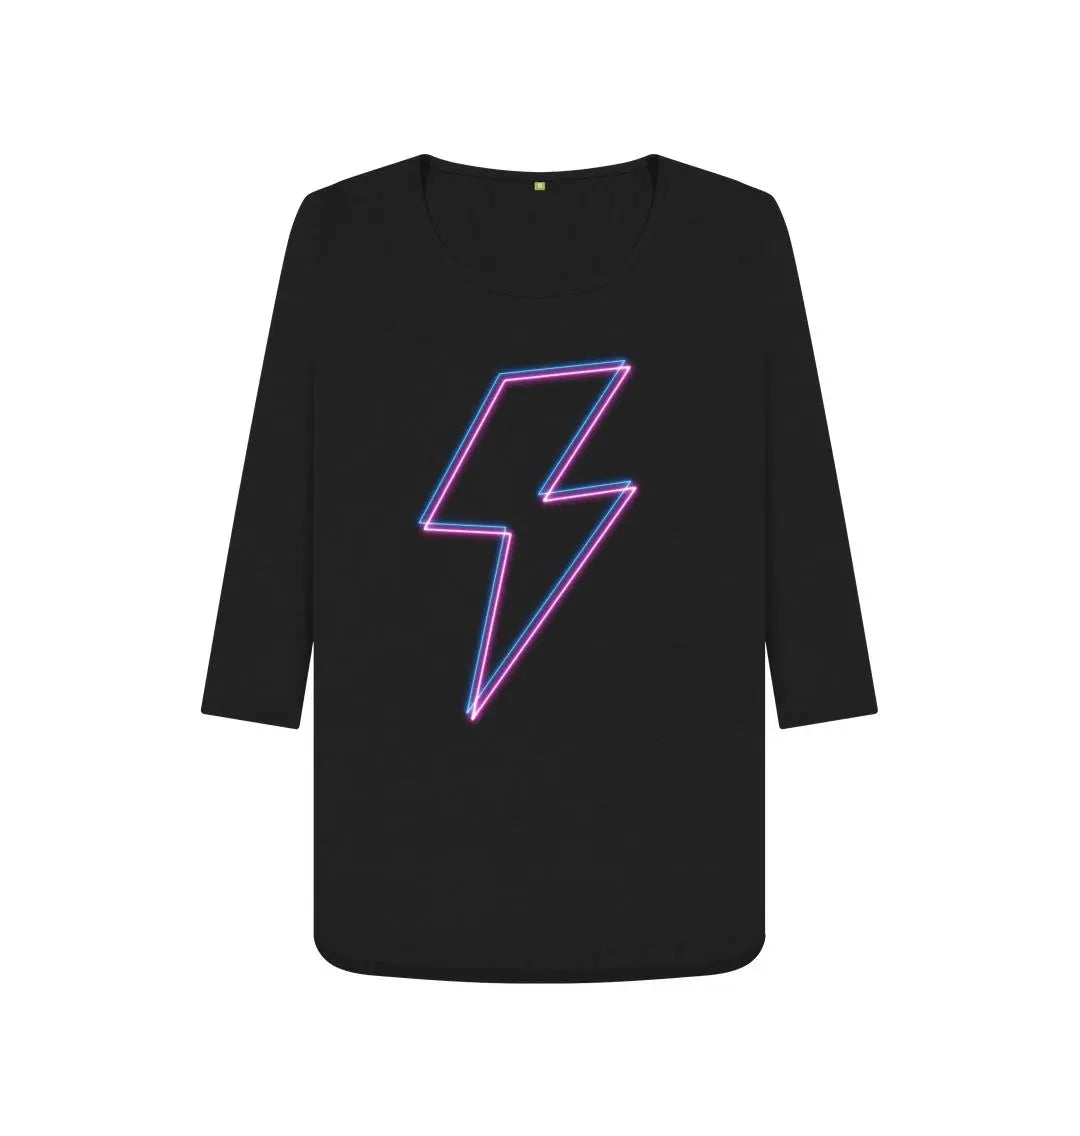 Quarter sleeve scoop neck neon lightning bolt t-shirt